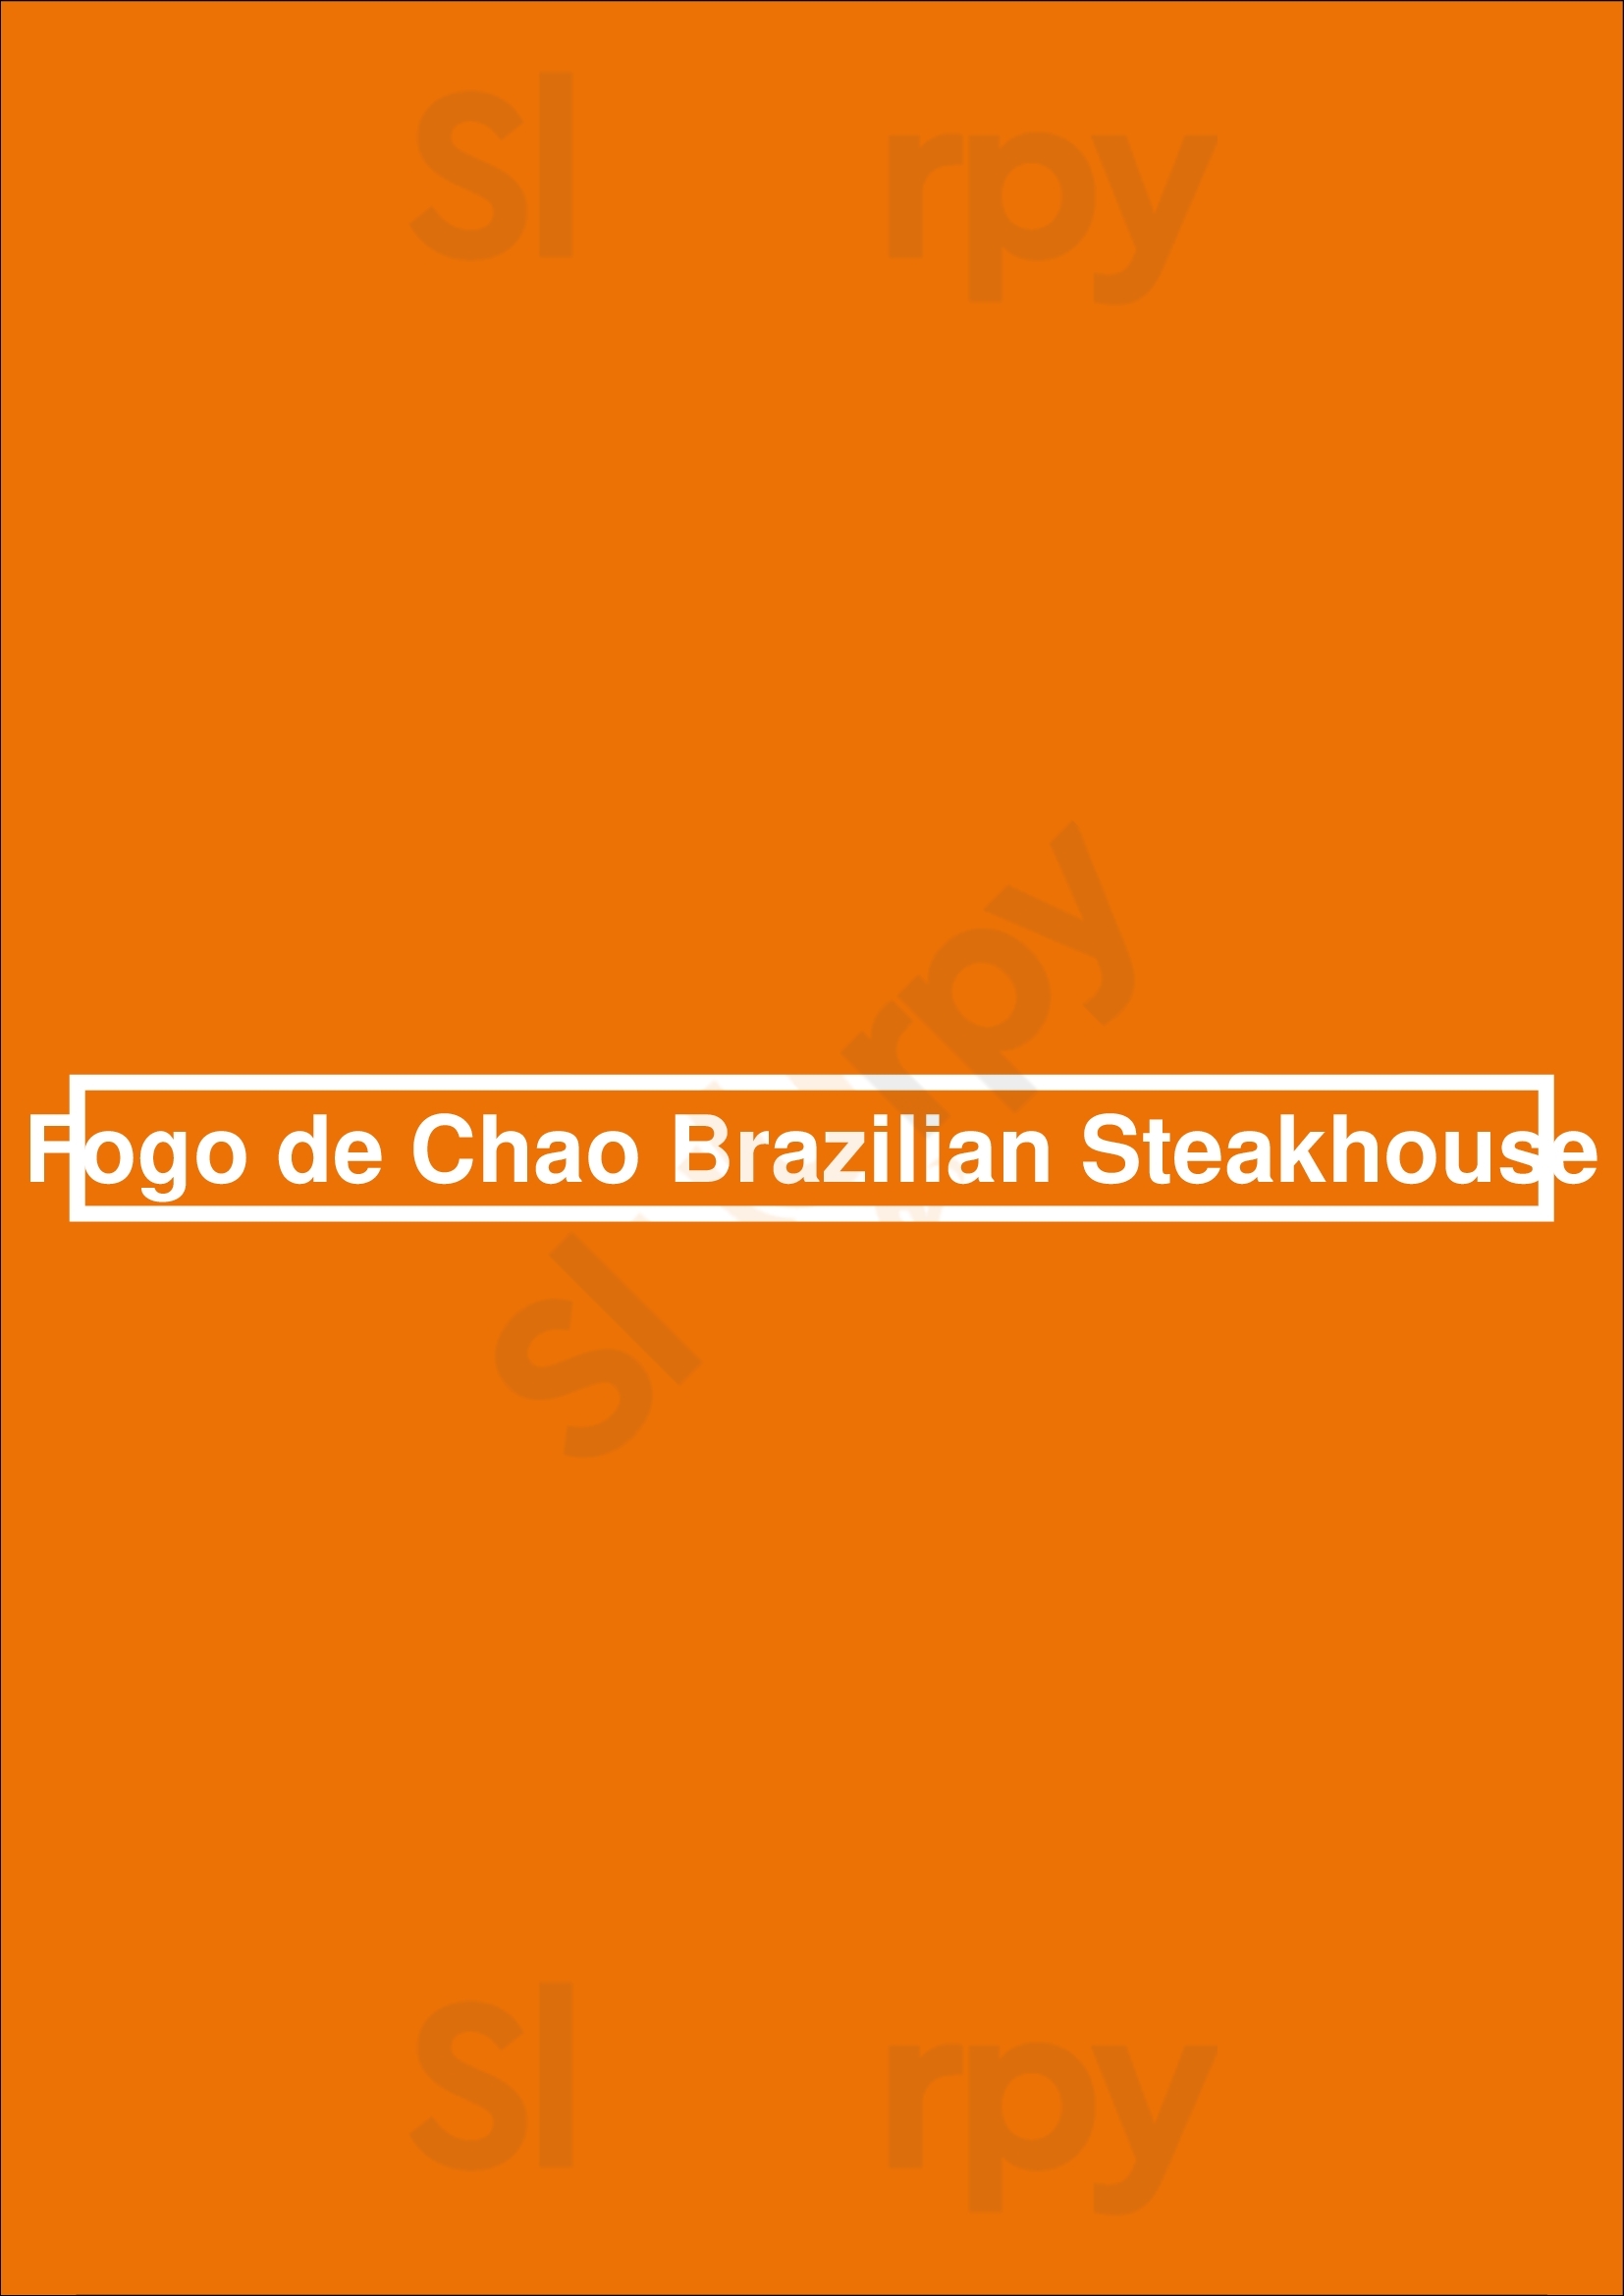 Fogo De Chao Brazilian Steakhouse Miami Beach Menu - 1